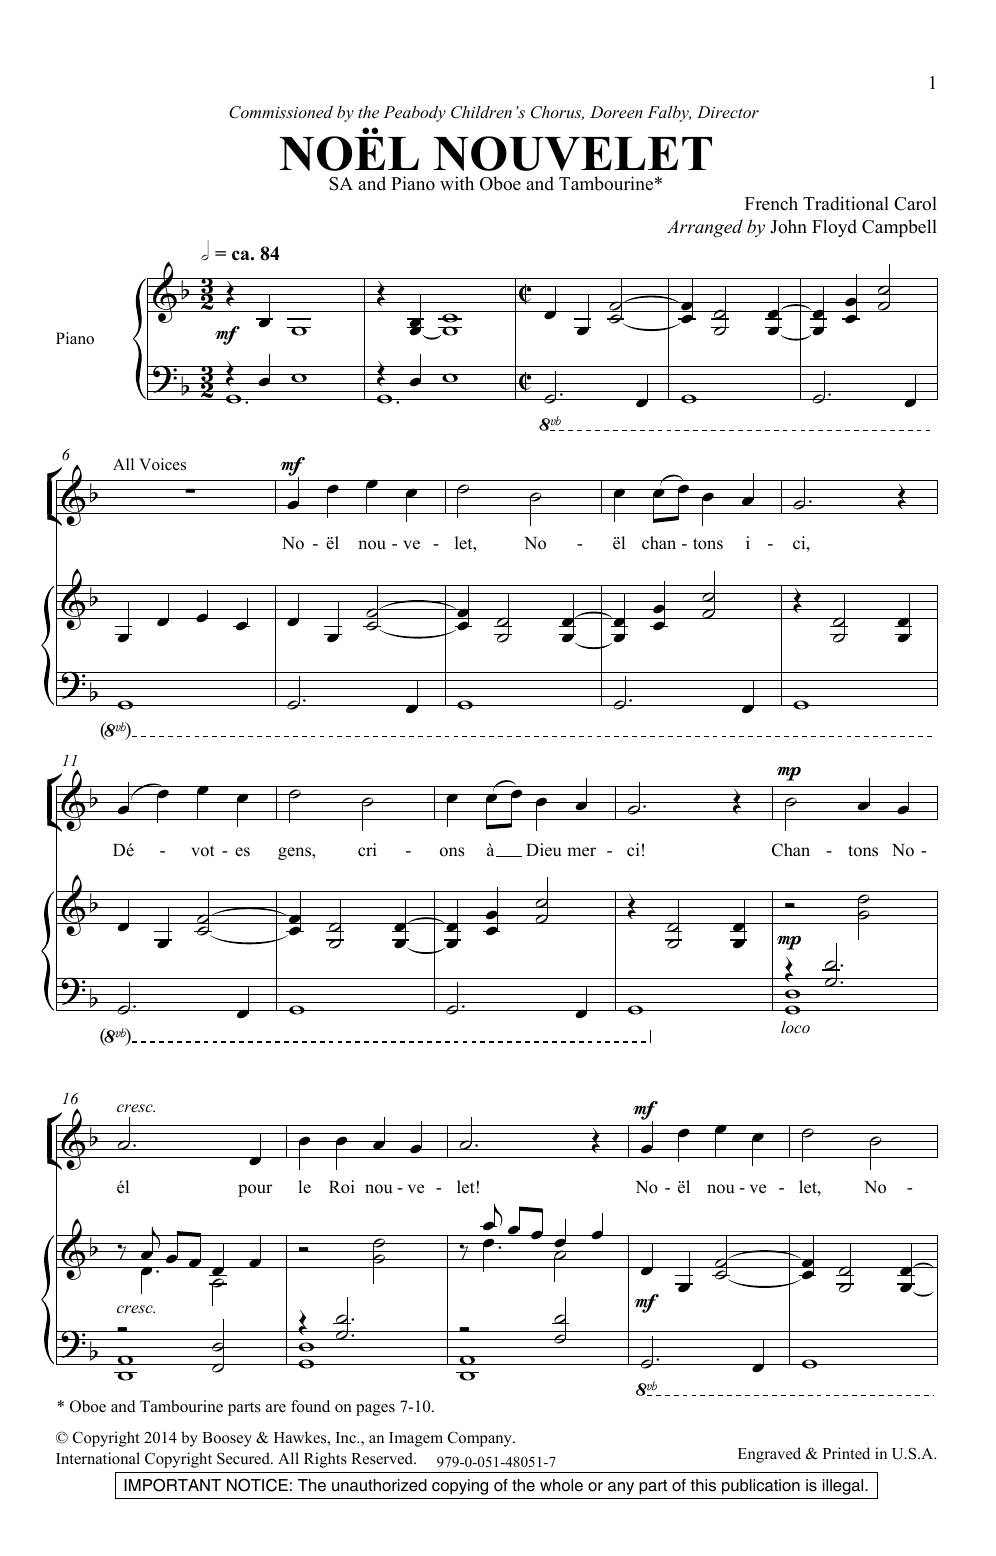 John Floyd Campbell Noel Nouvelet Sheet Music Notes & Chords for 2-Part Choir - Download or Print PDF